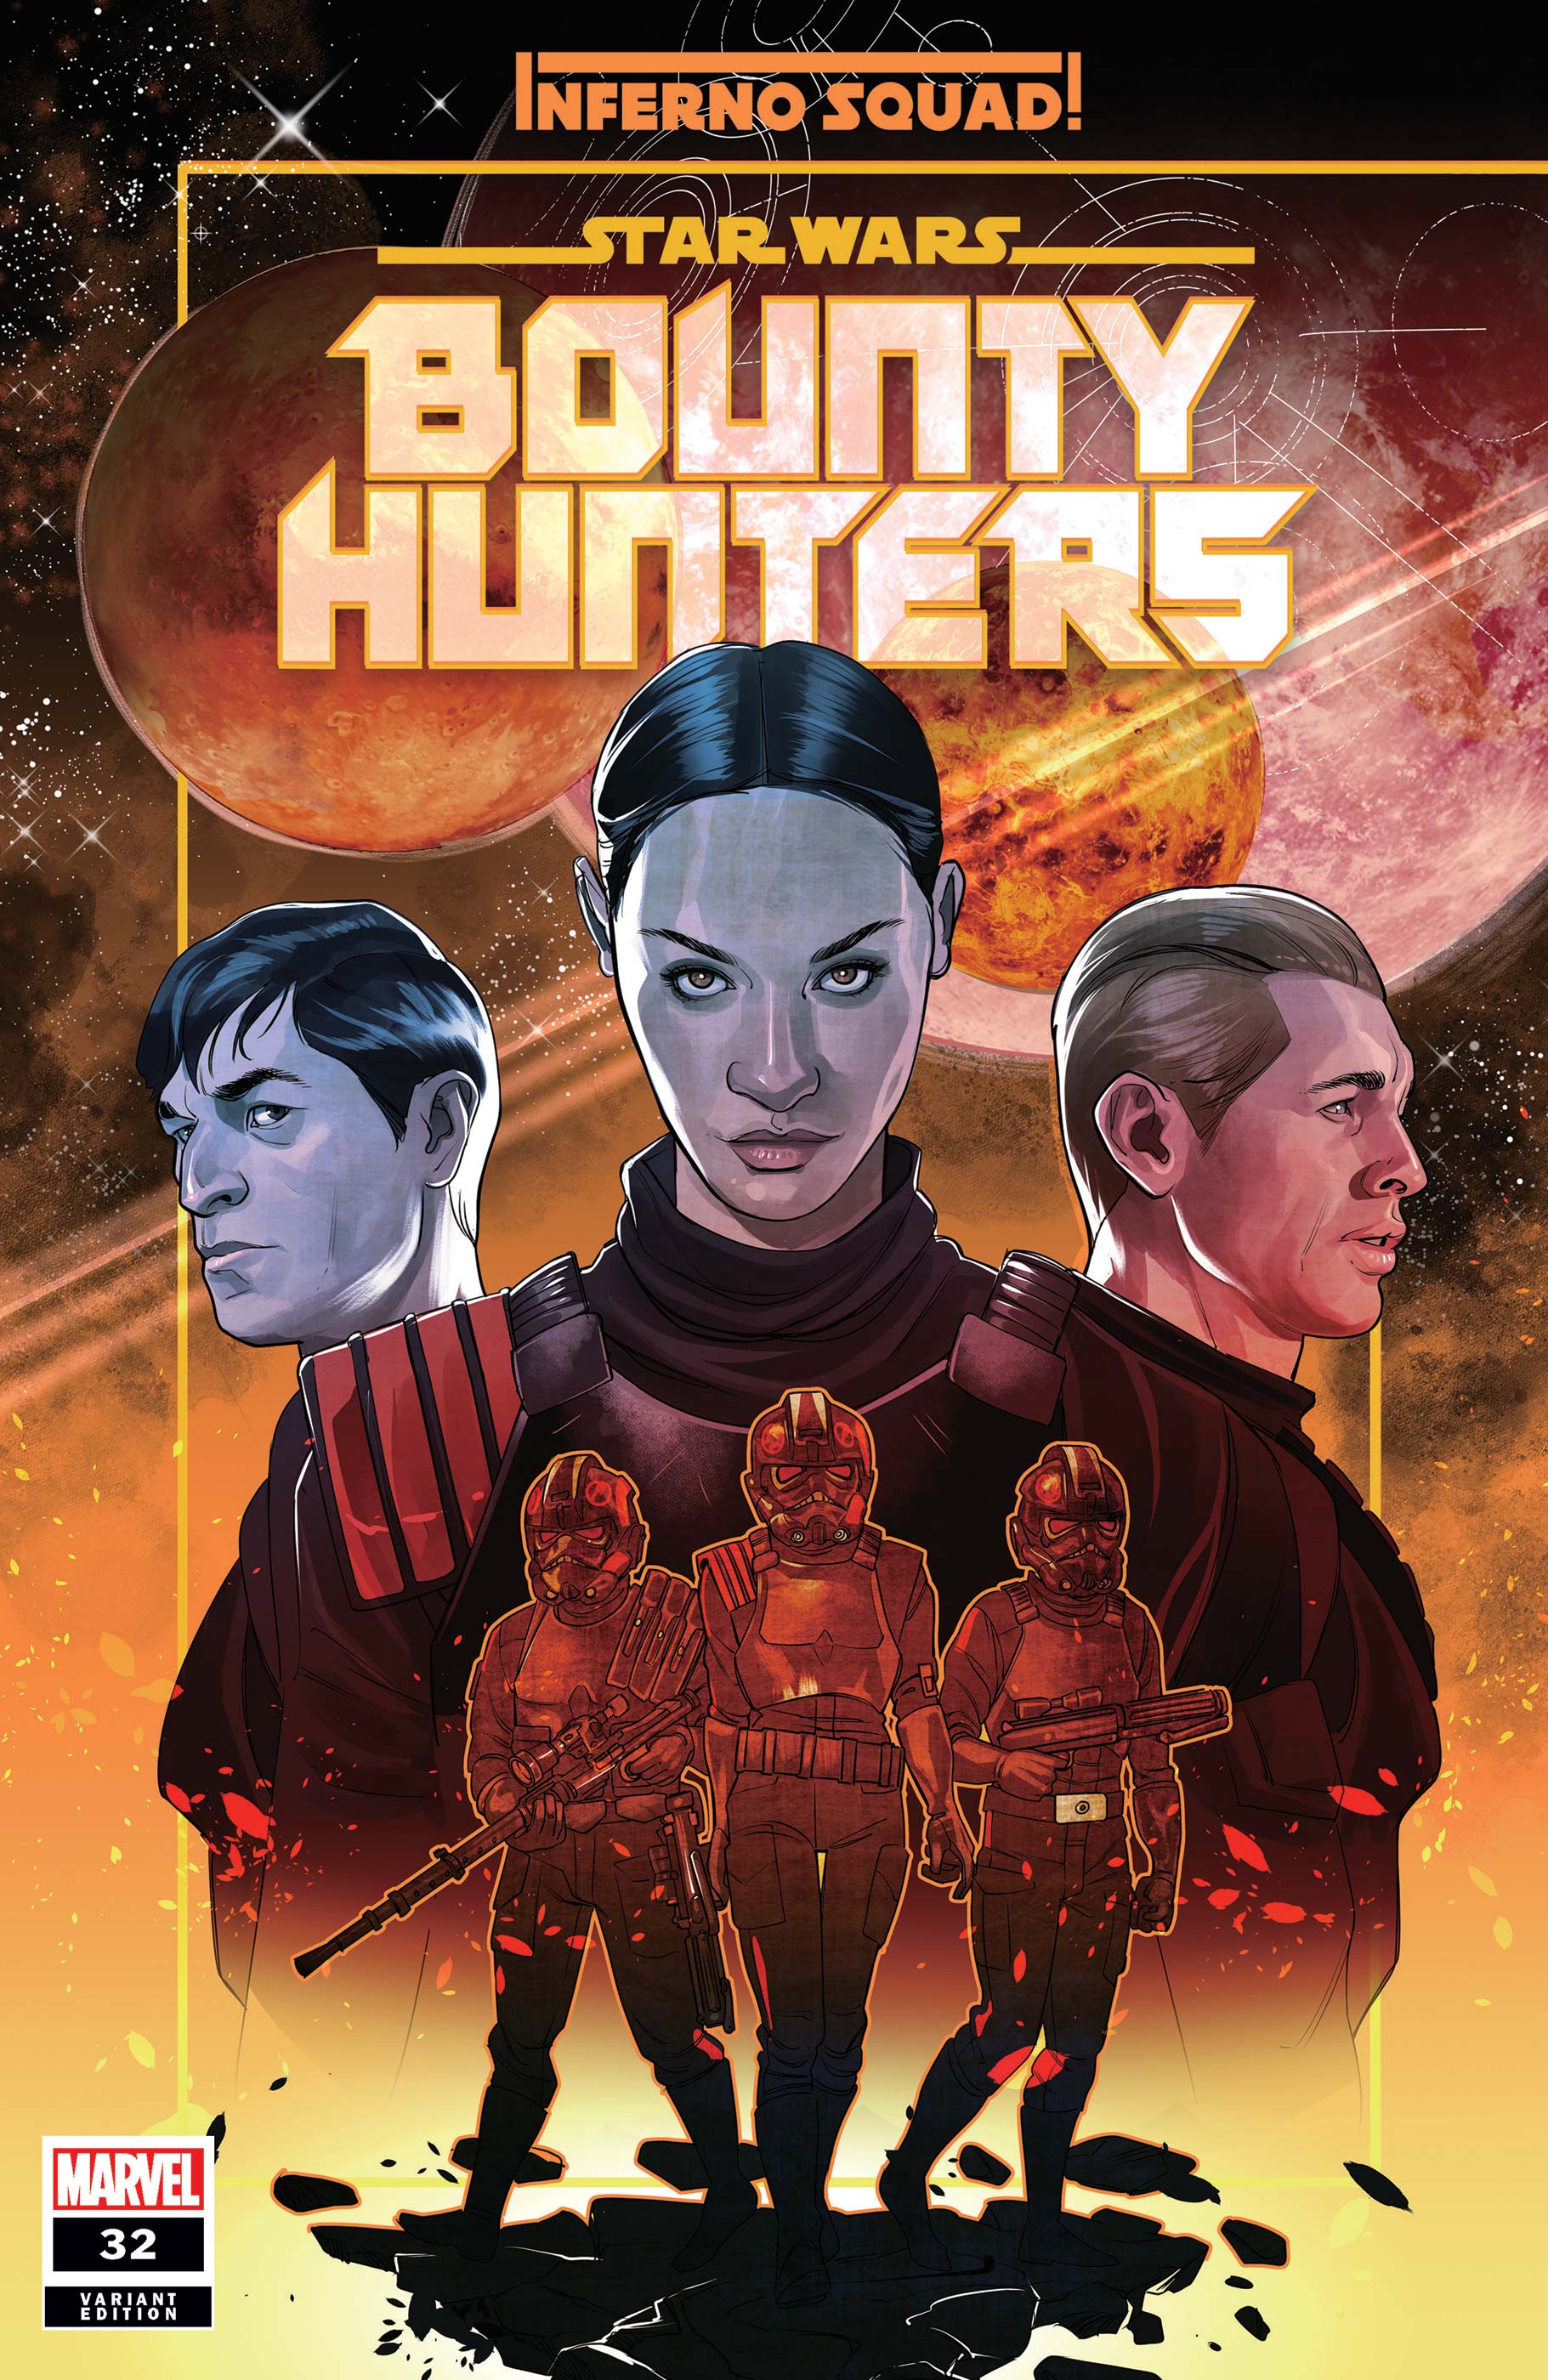 Star Wars: Bounty Hunters (2020) #32 (Variant)